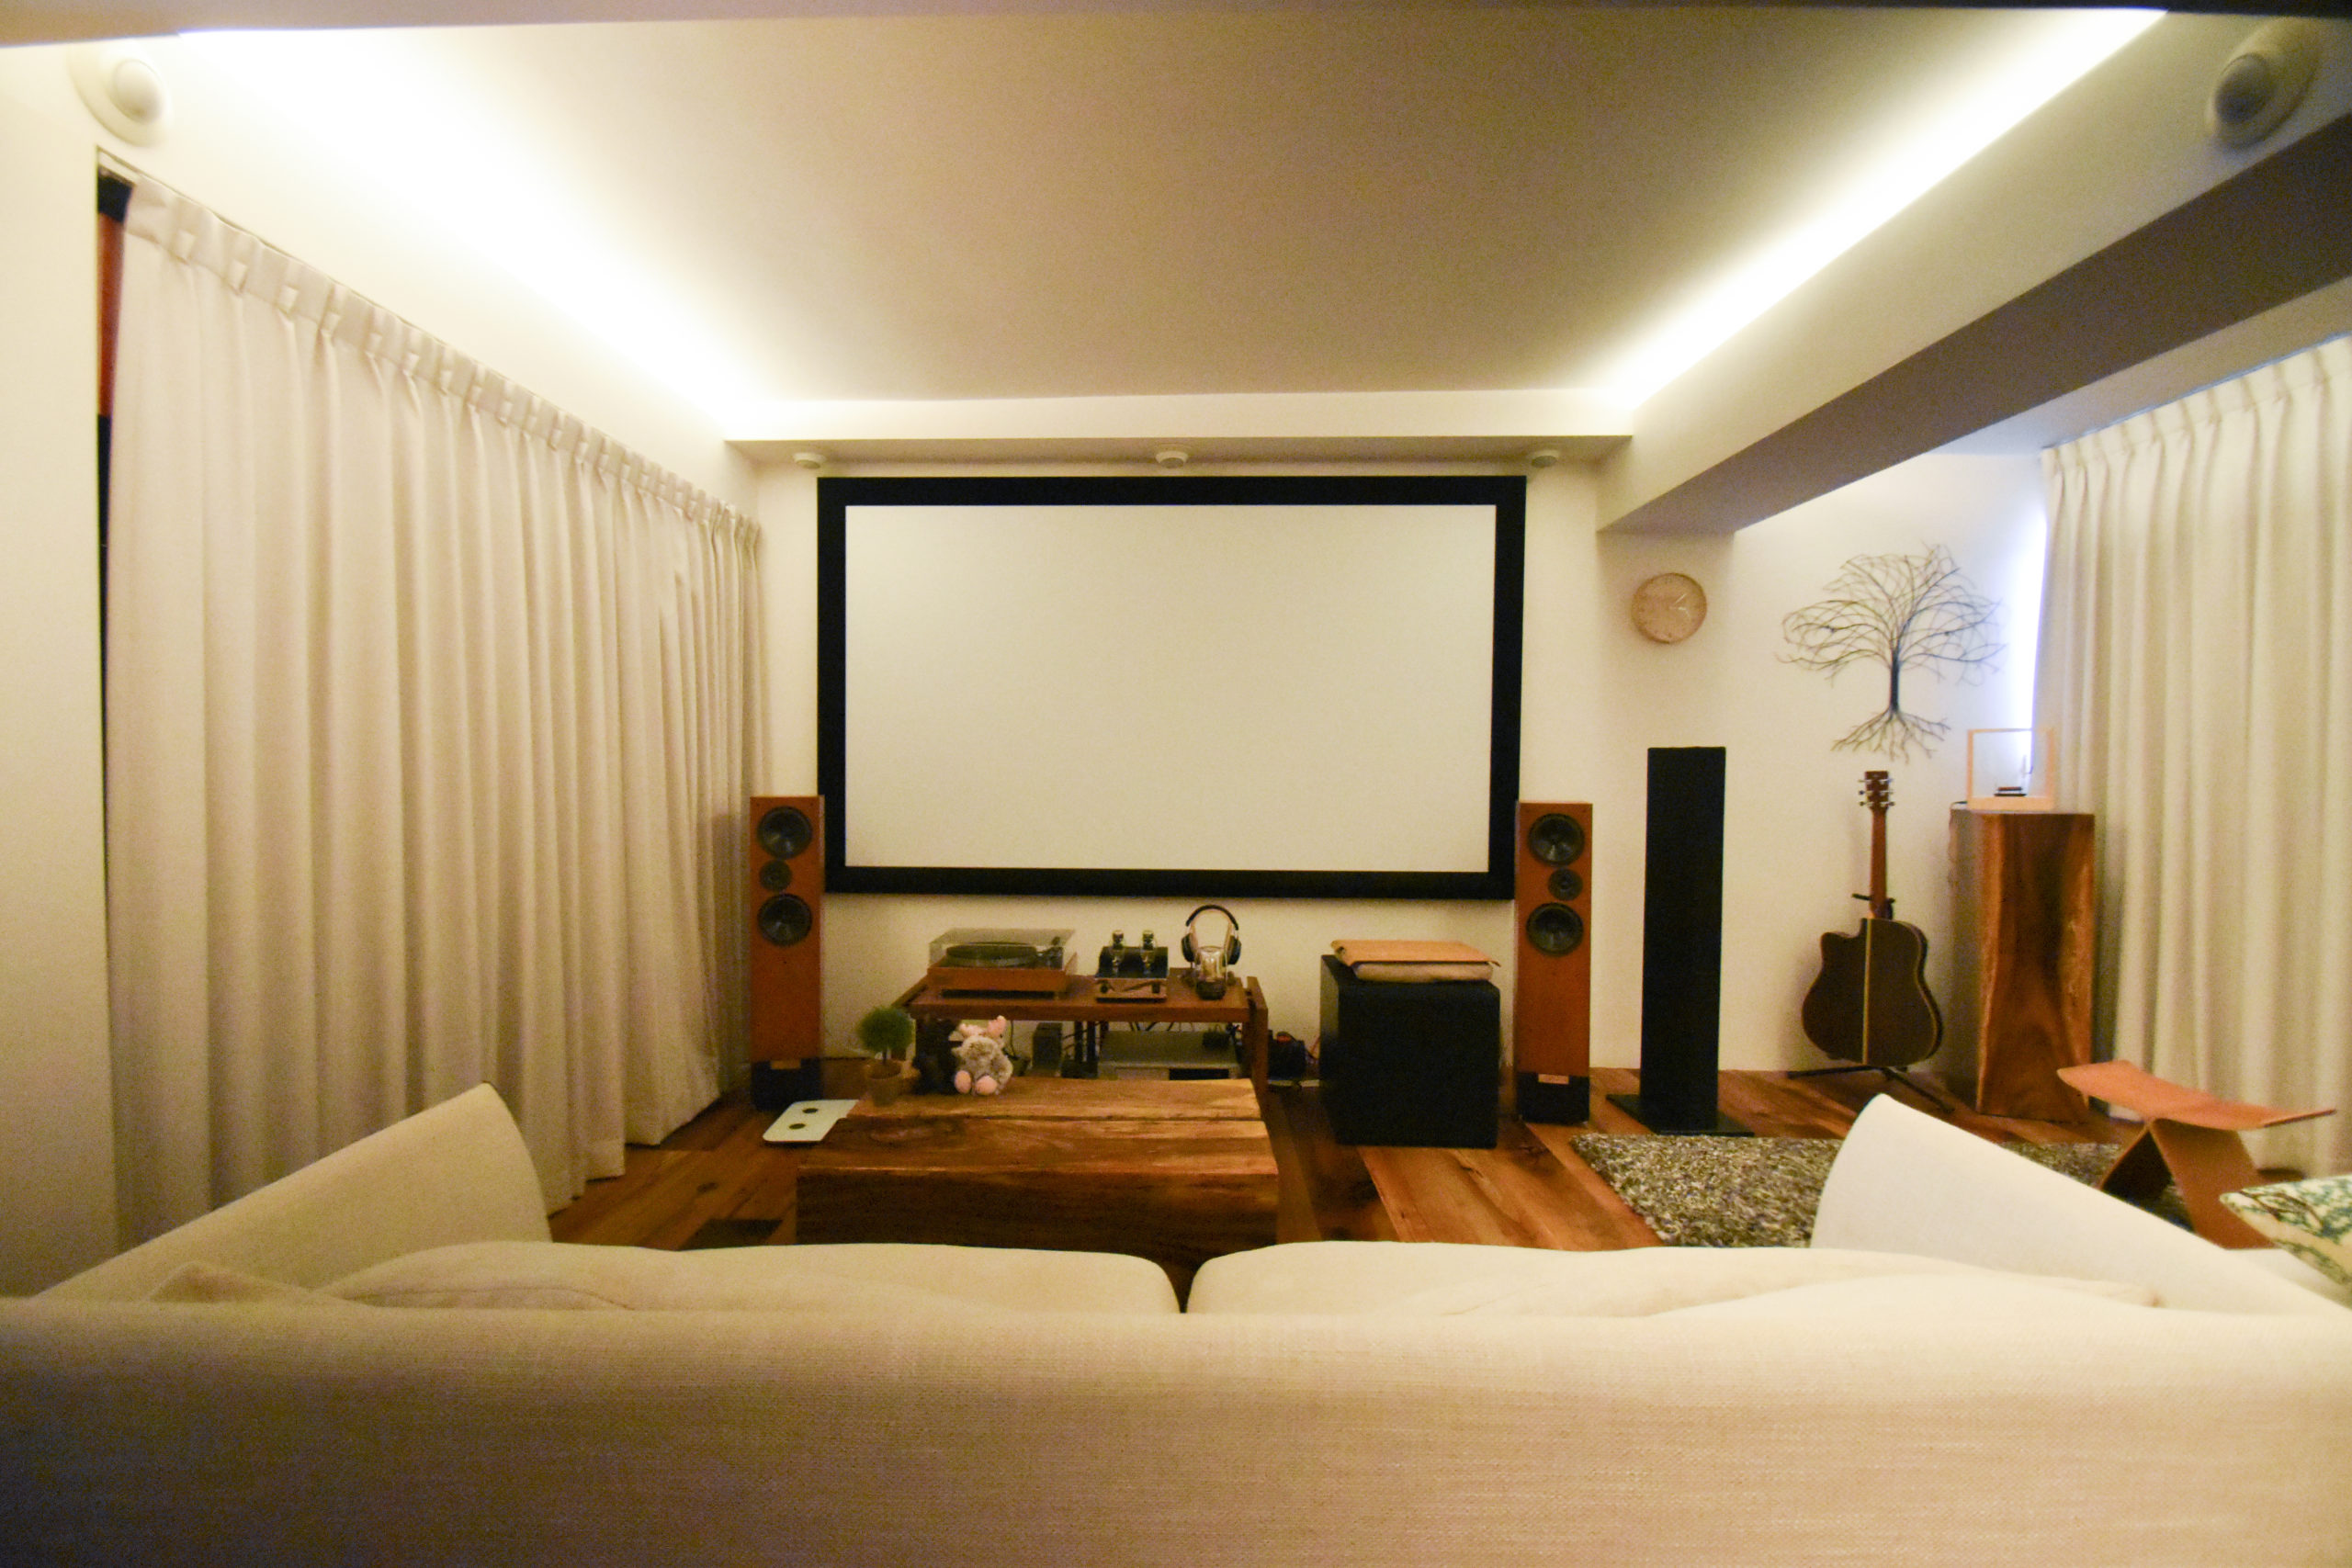 interior design for living room